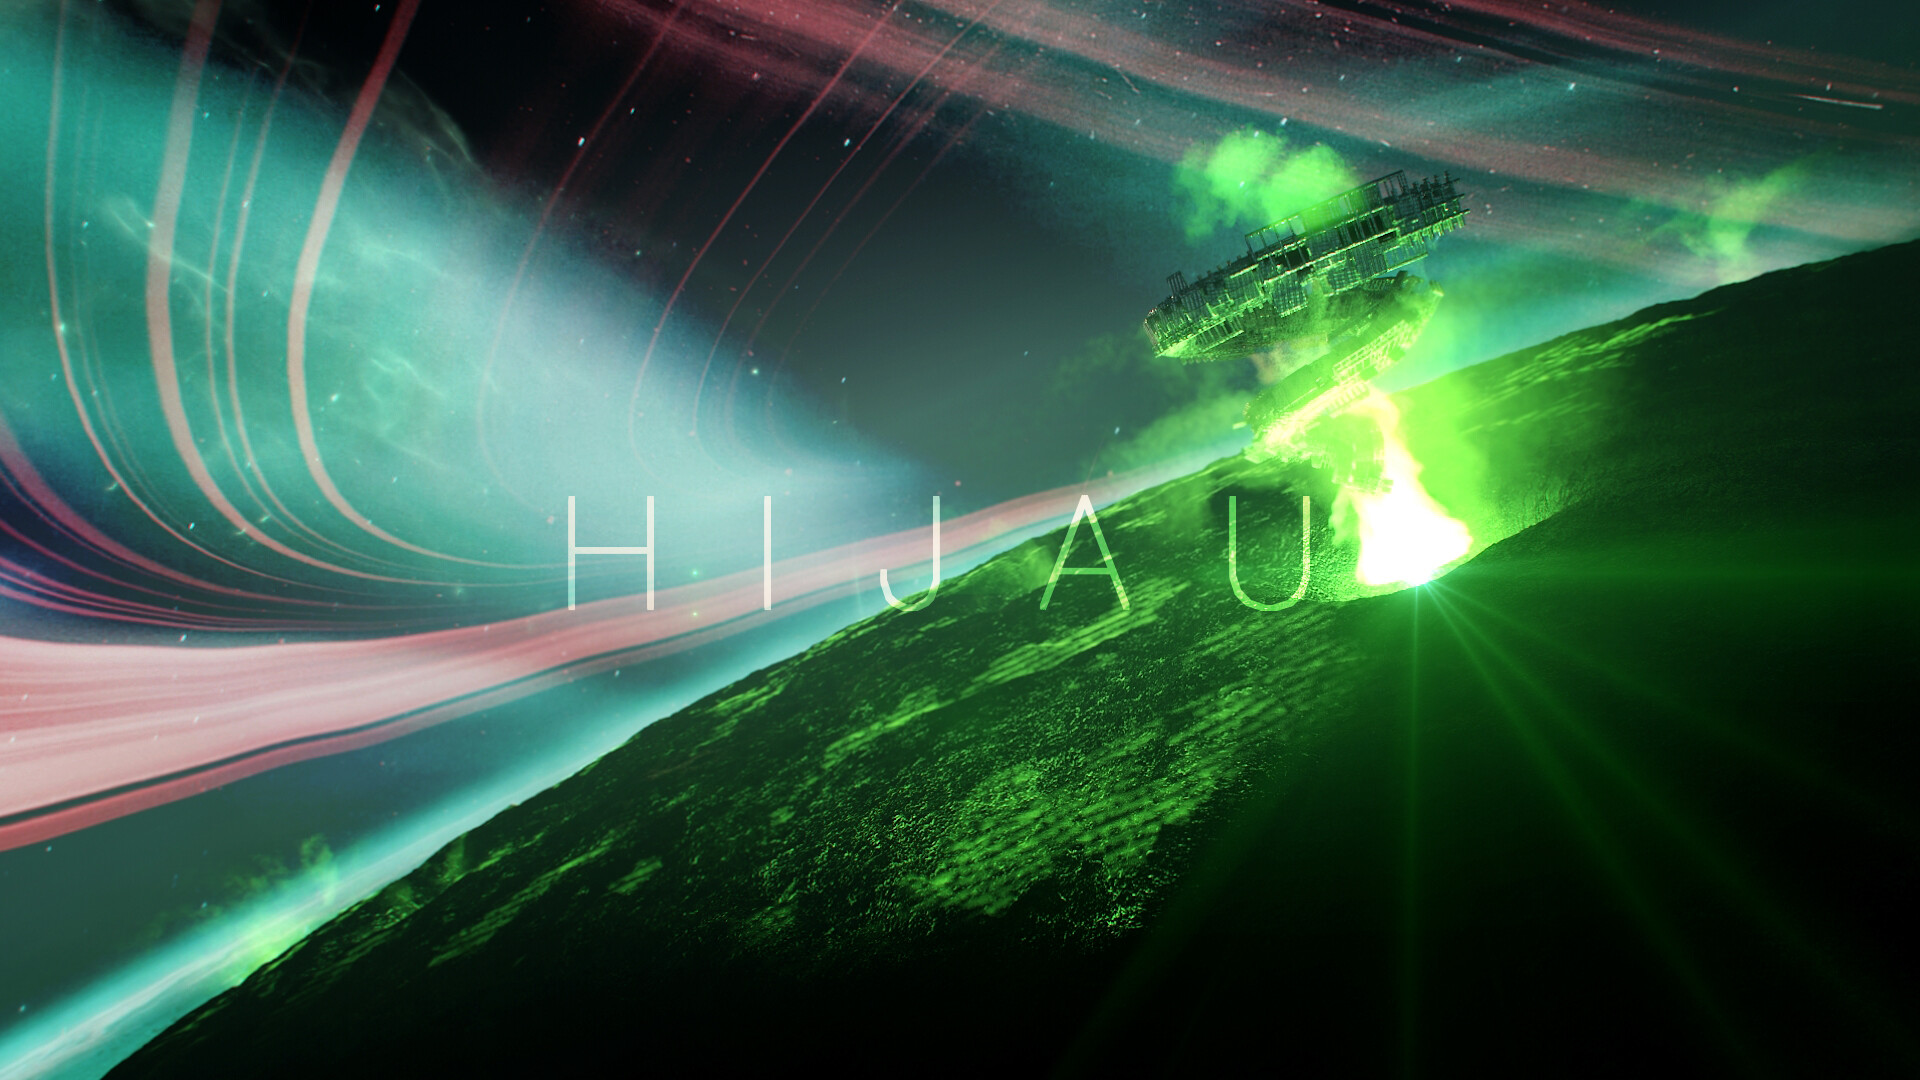 Hijau, A Strange Universe